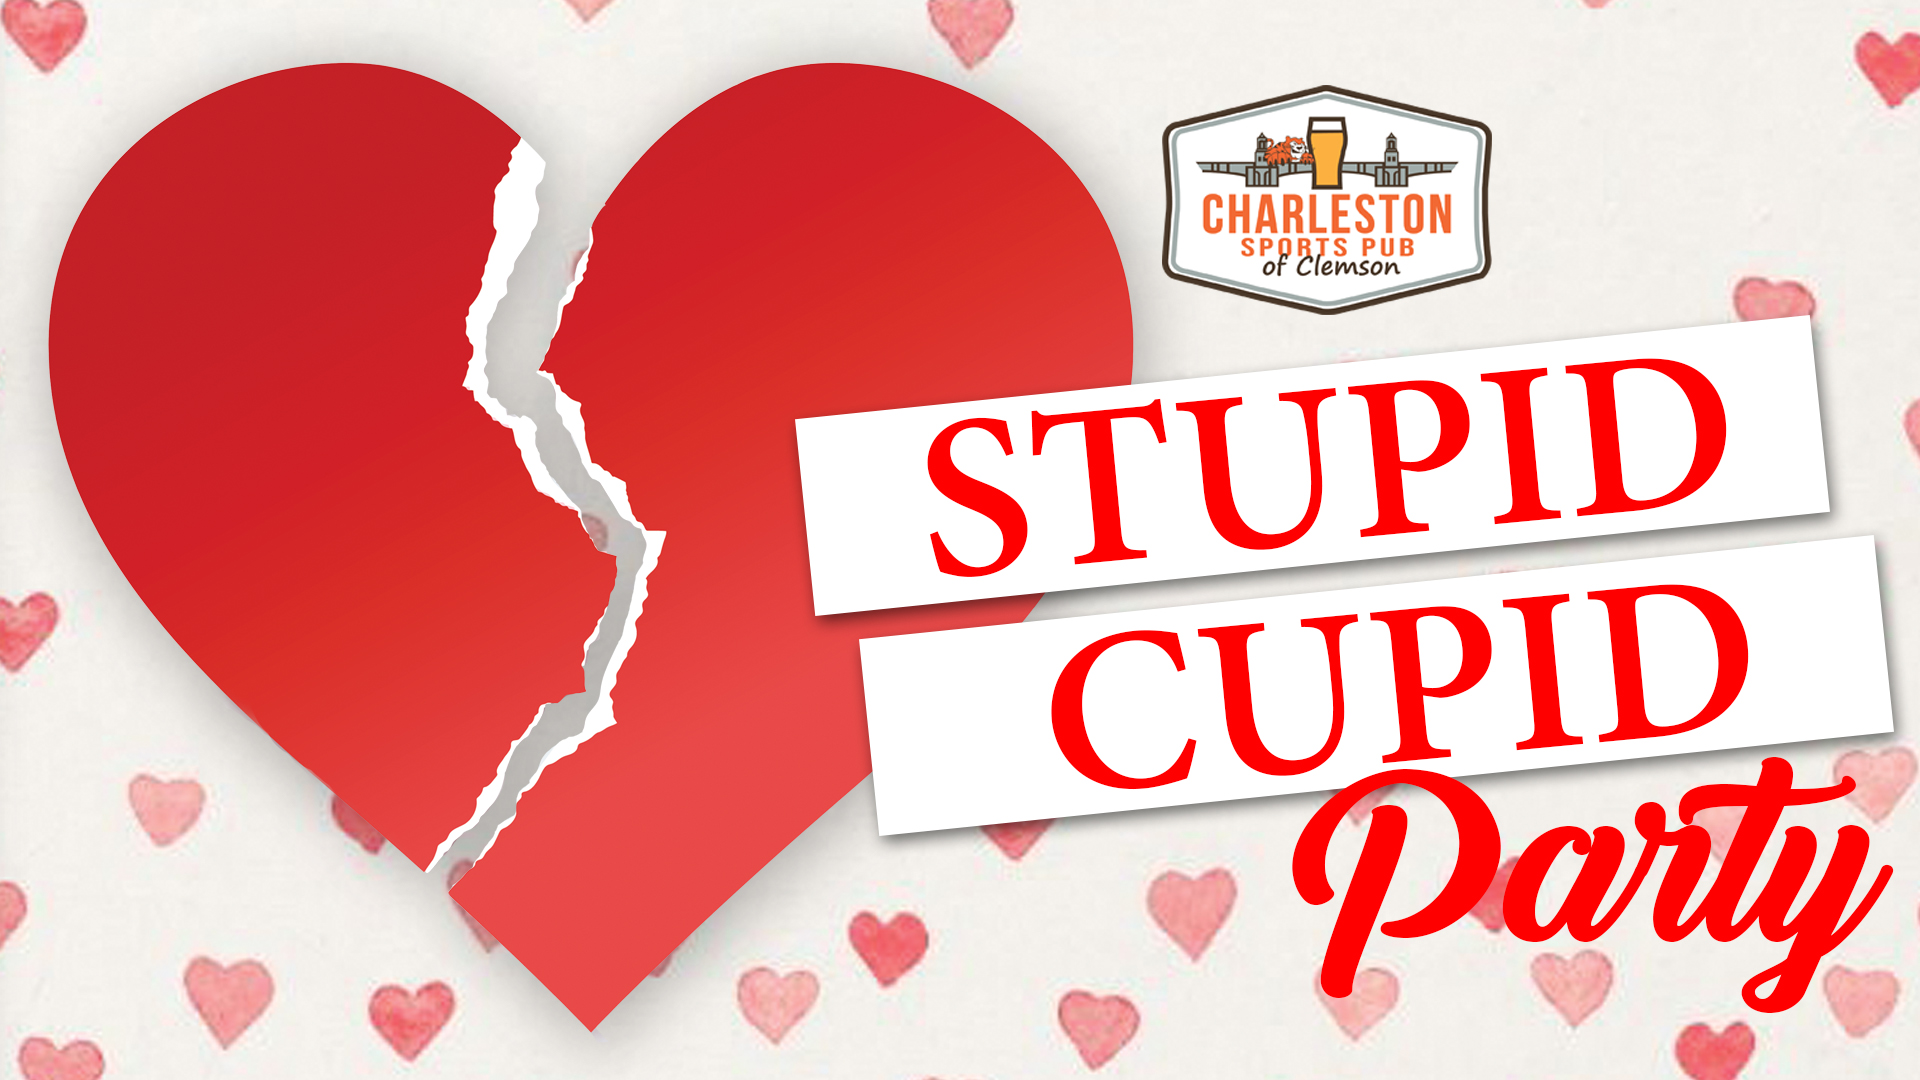 Stupid Cupid VIP Party in Clemson - Charleston Sports Pub - Sports ...